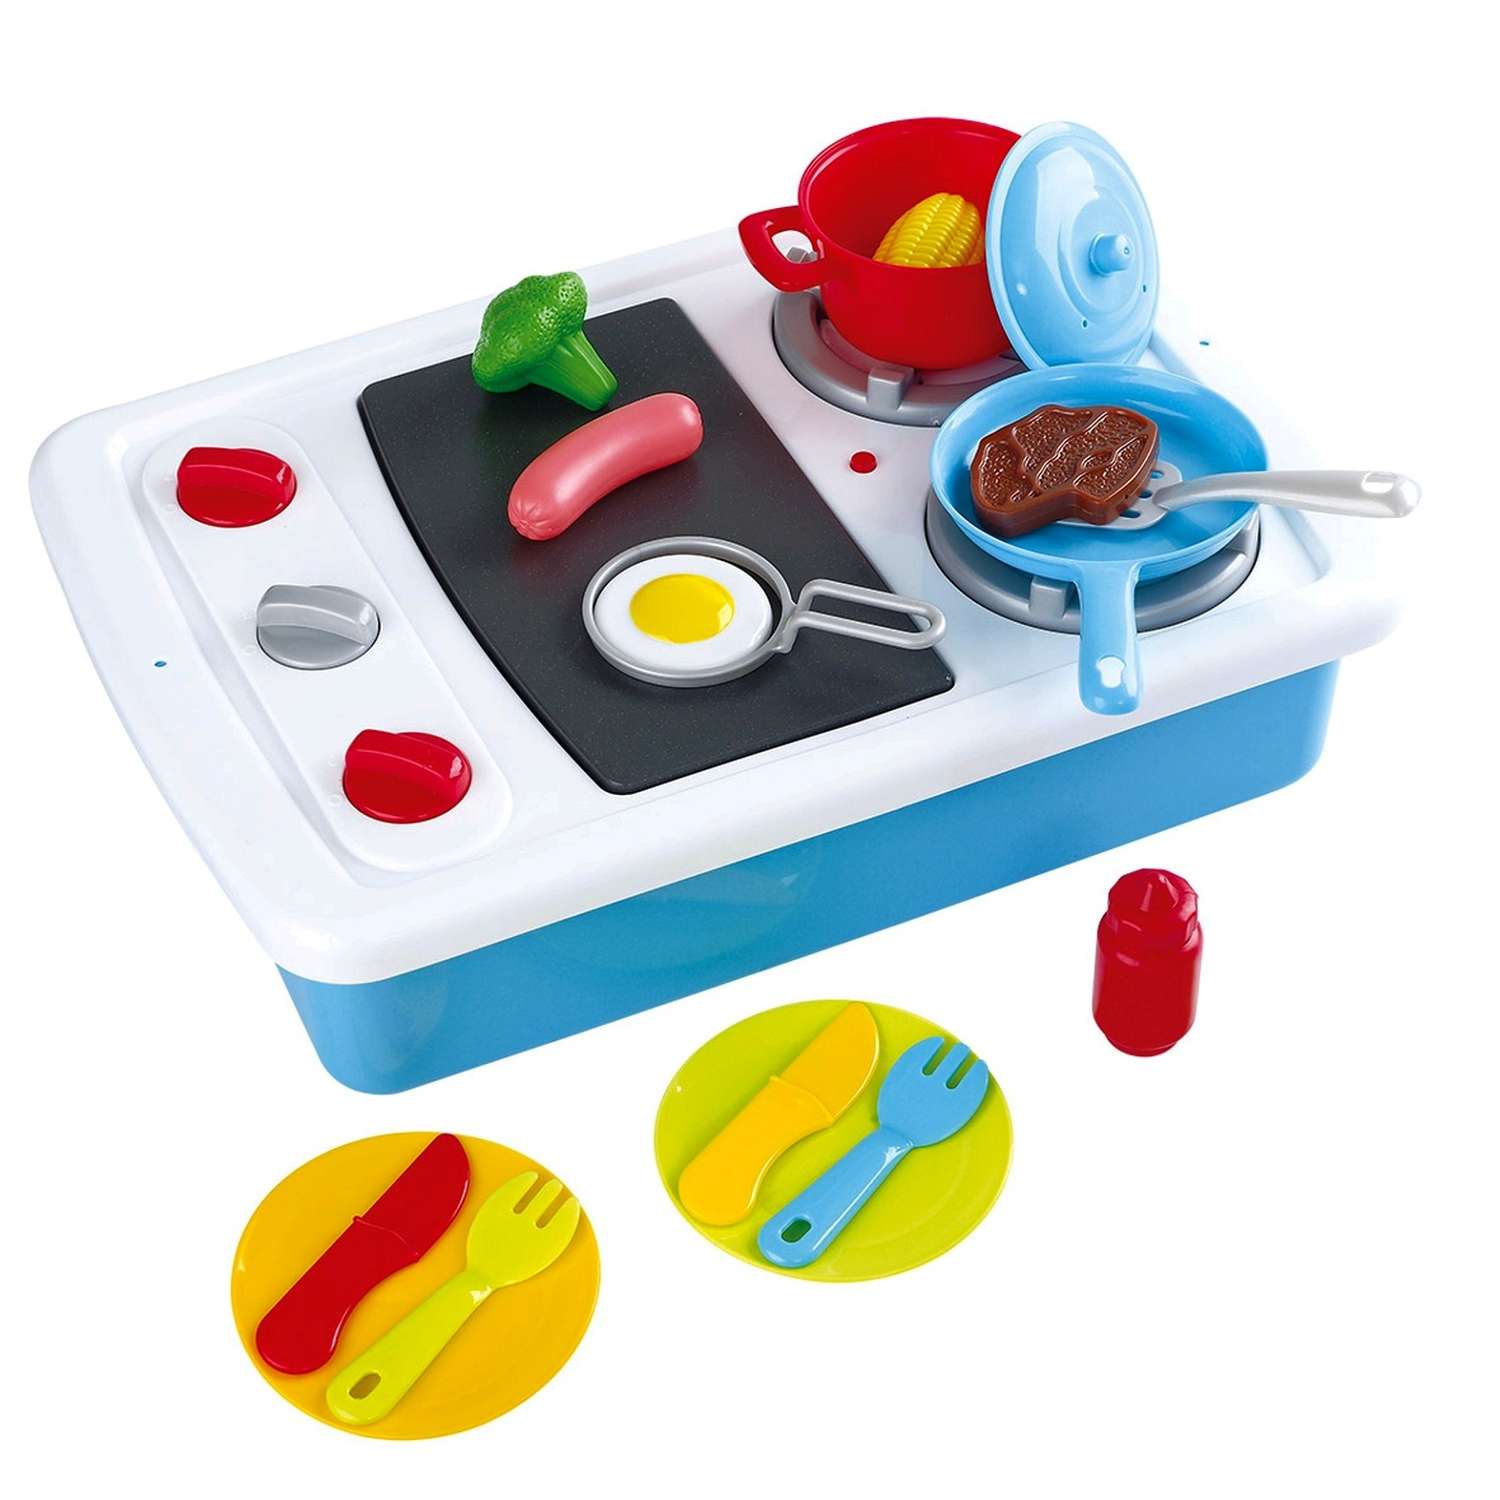 Плита Playgo кухонная с грилем 2в1 21предмет Play 3605 - фото 1